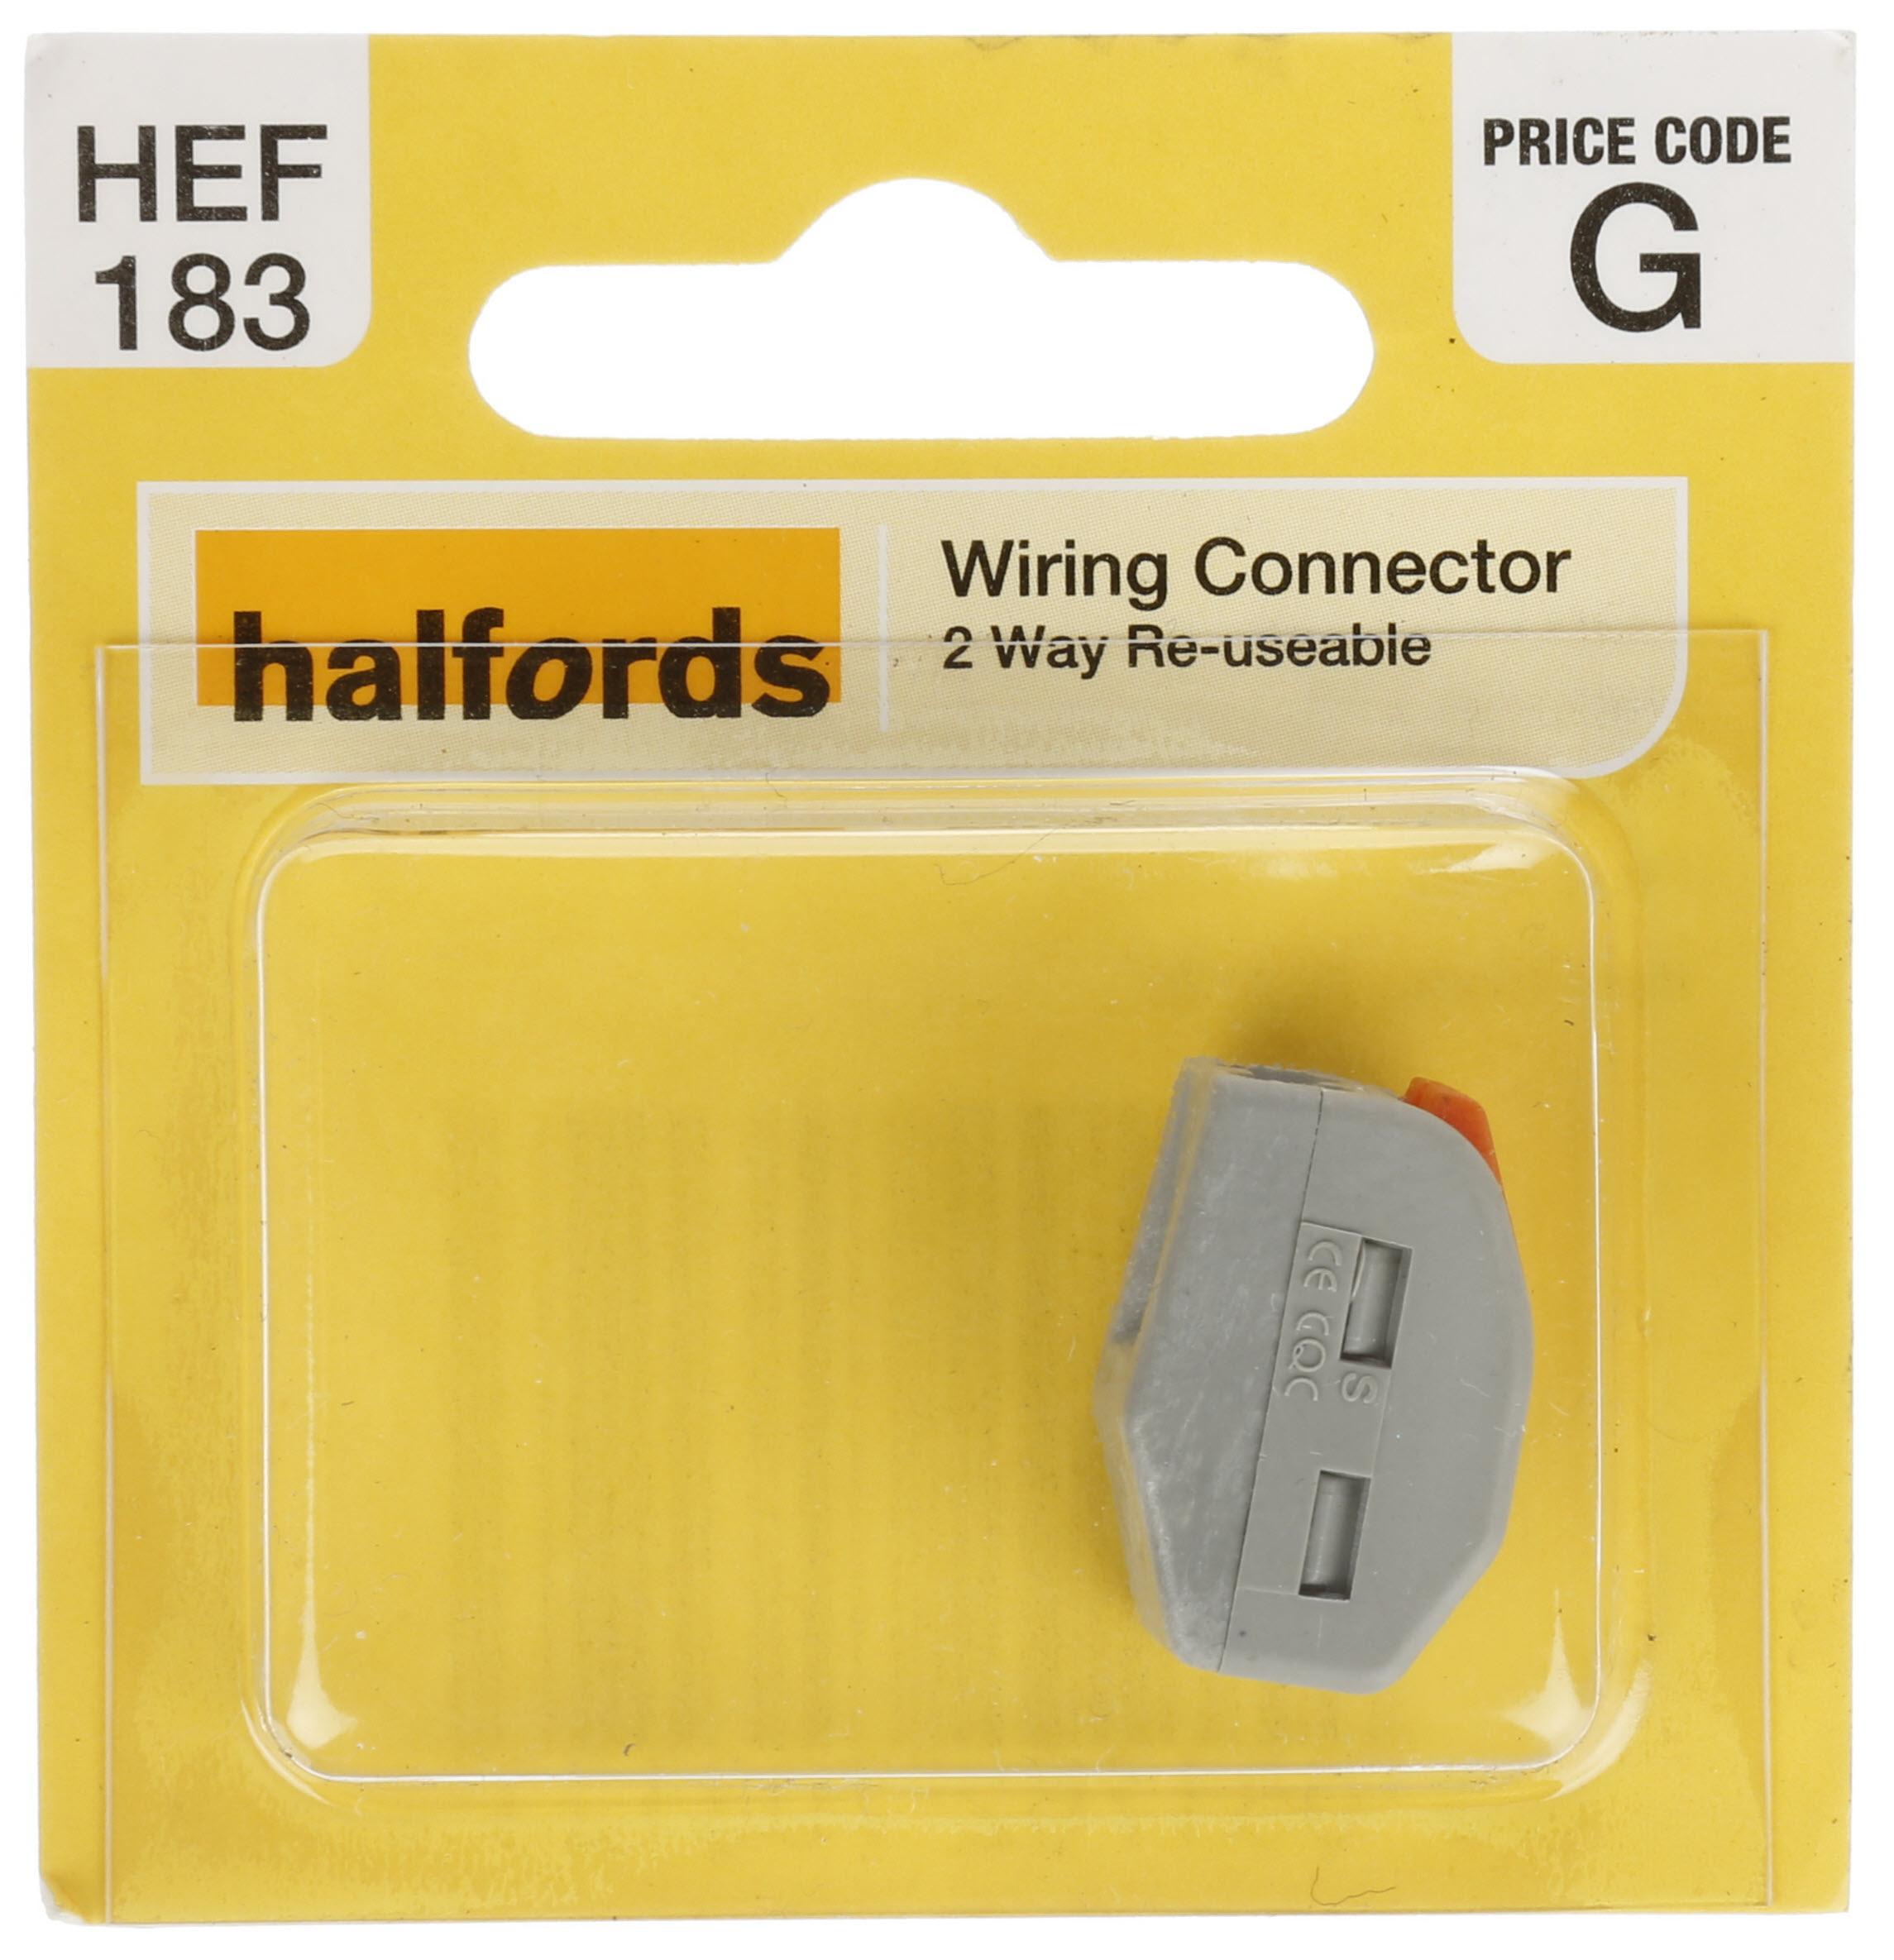 Halfords  Reuseable Wiring Connector  2 Way Hef183